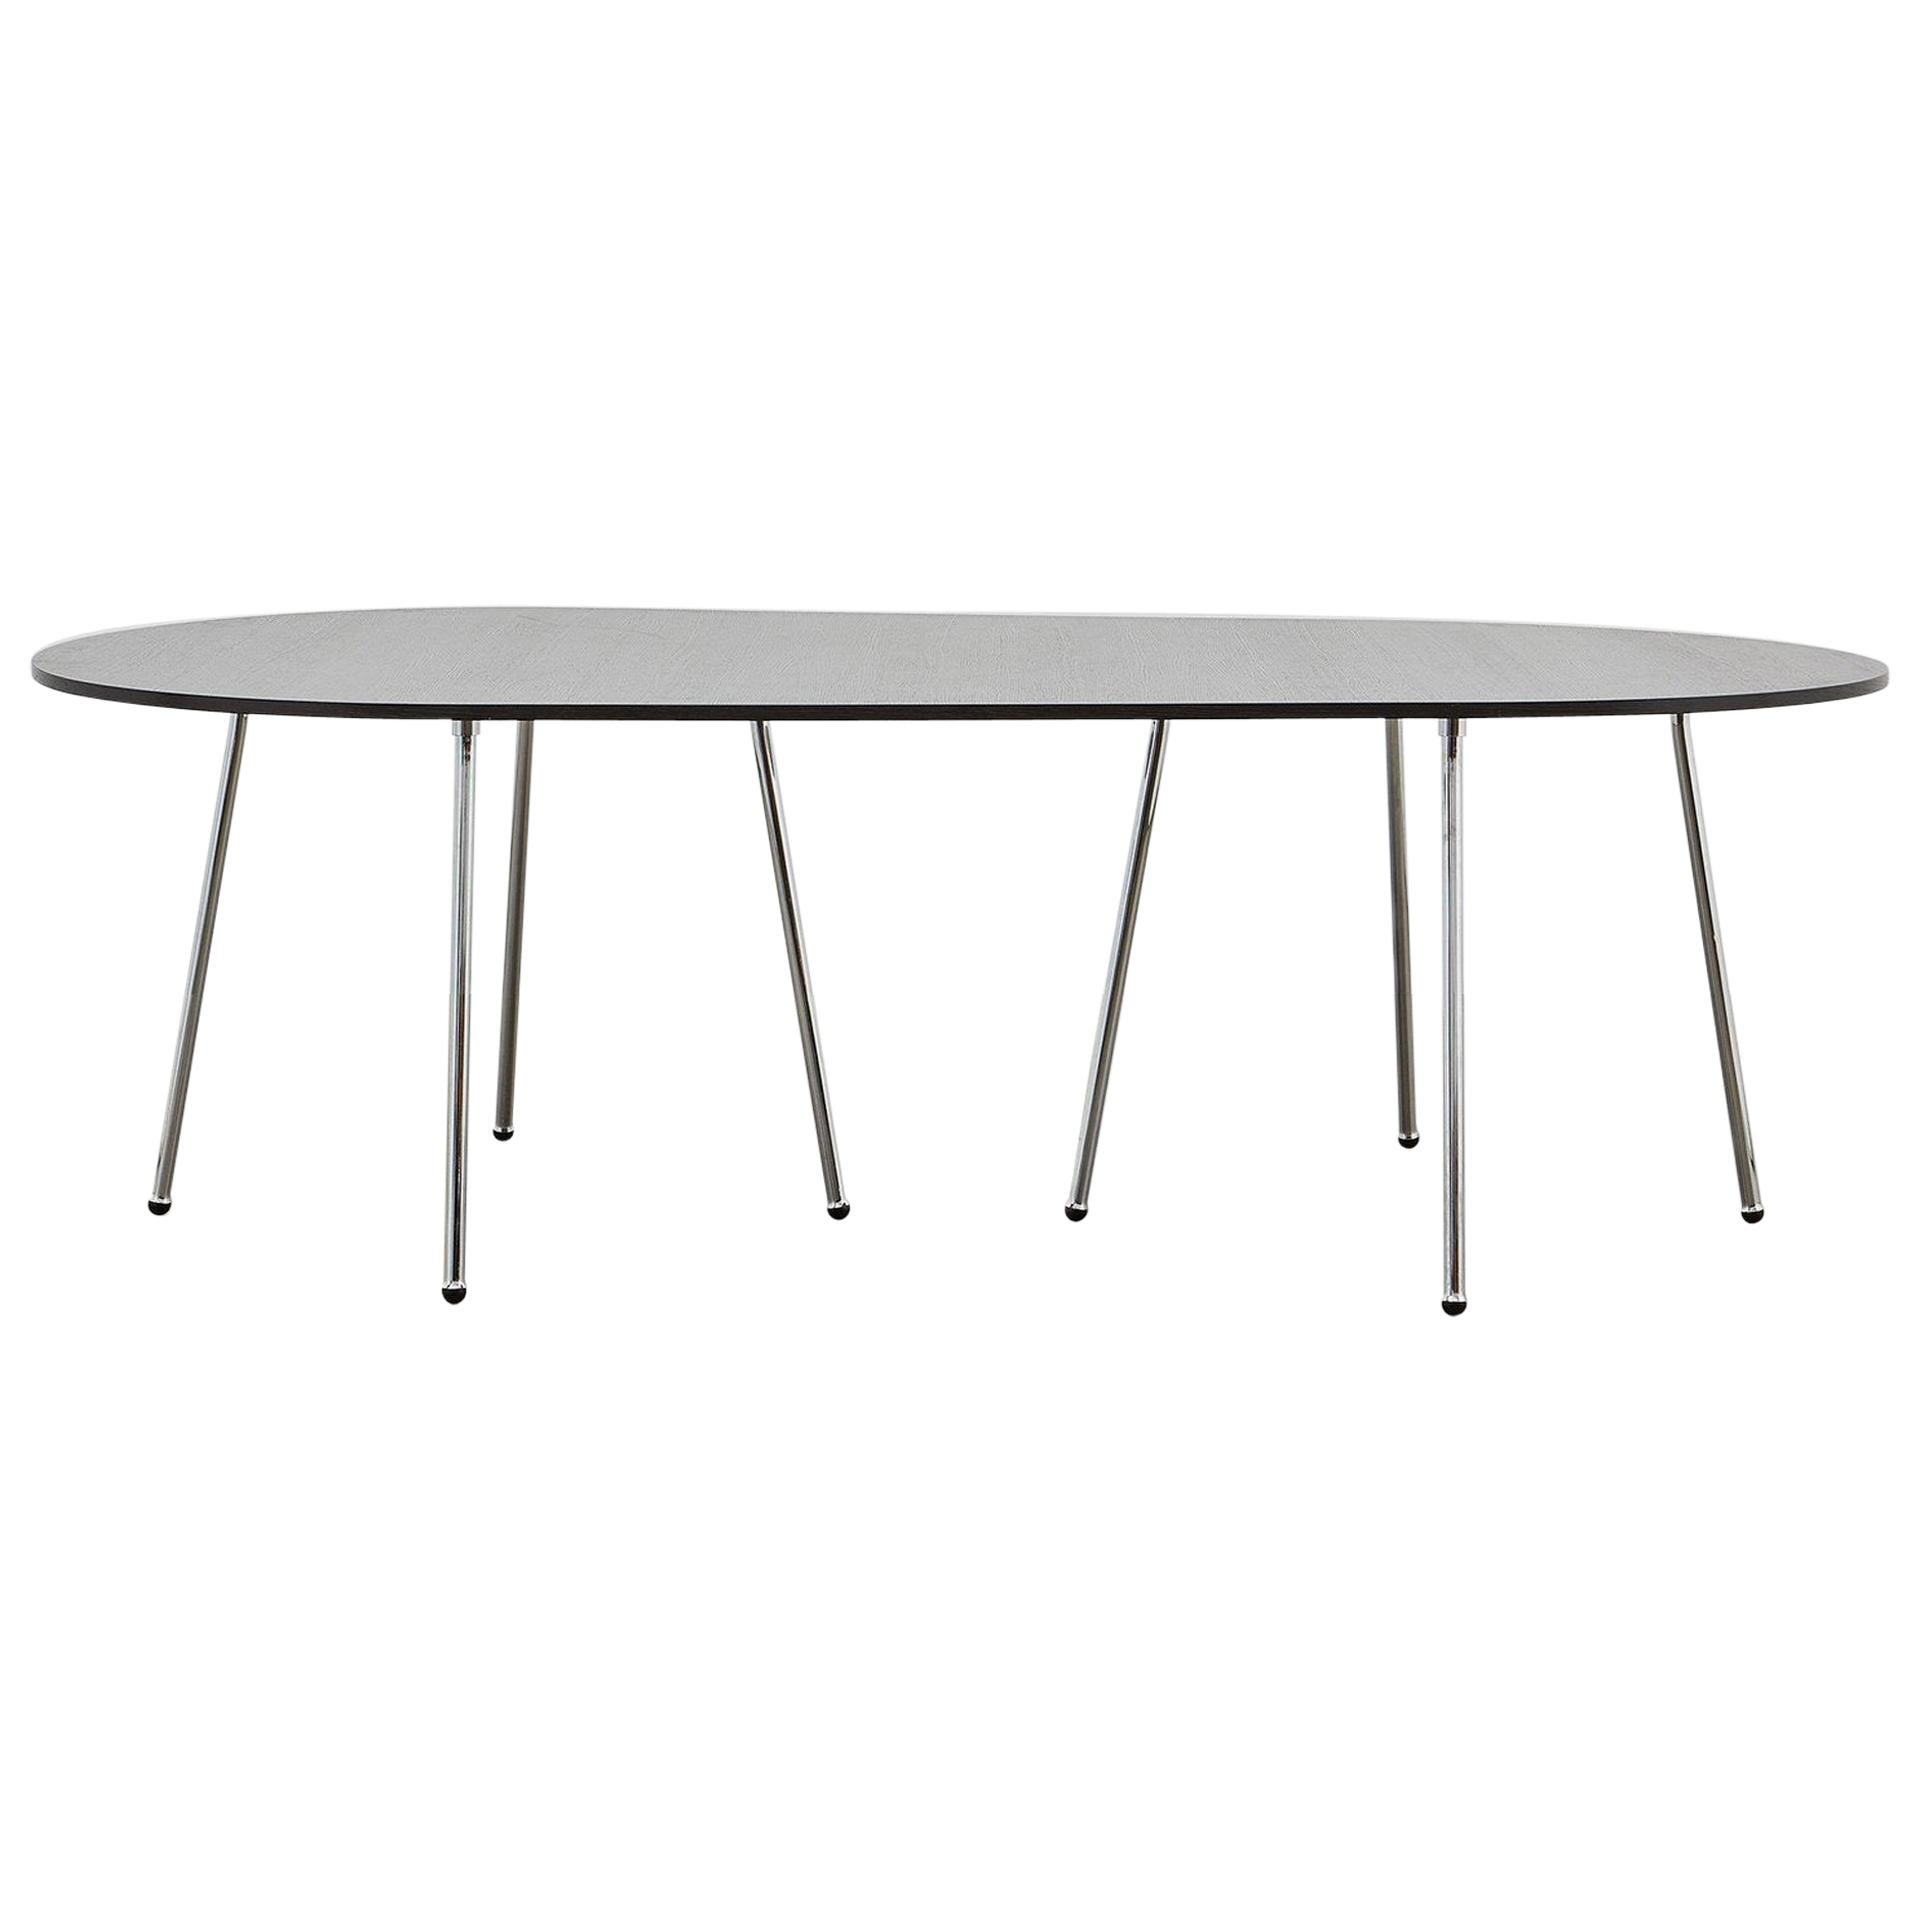 PH Dining Table, 1270x2370mm, chrome, black oak veneer table plate and edge